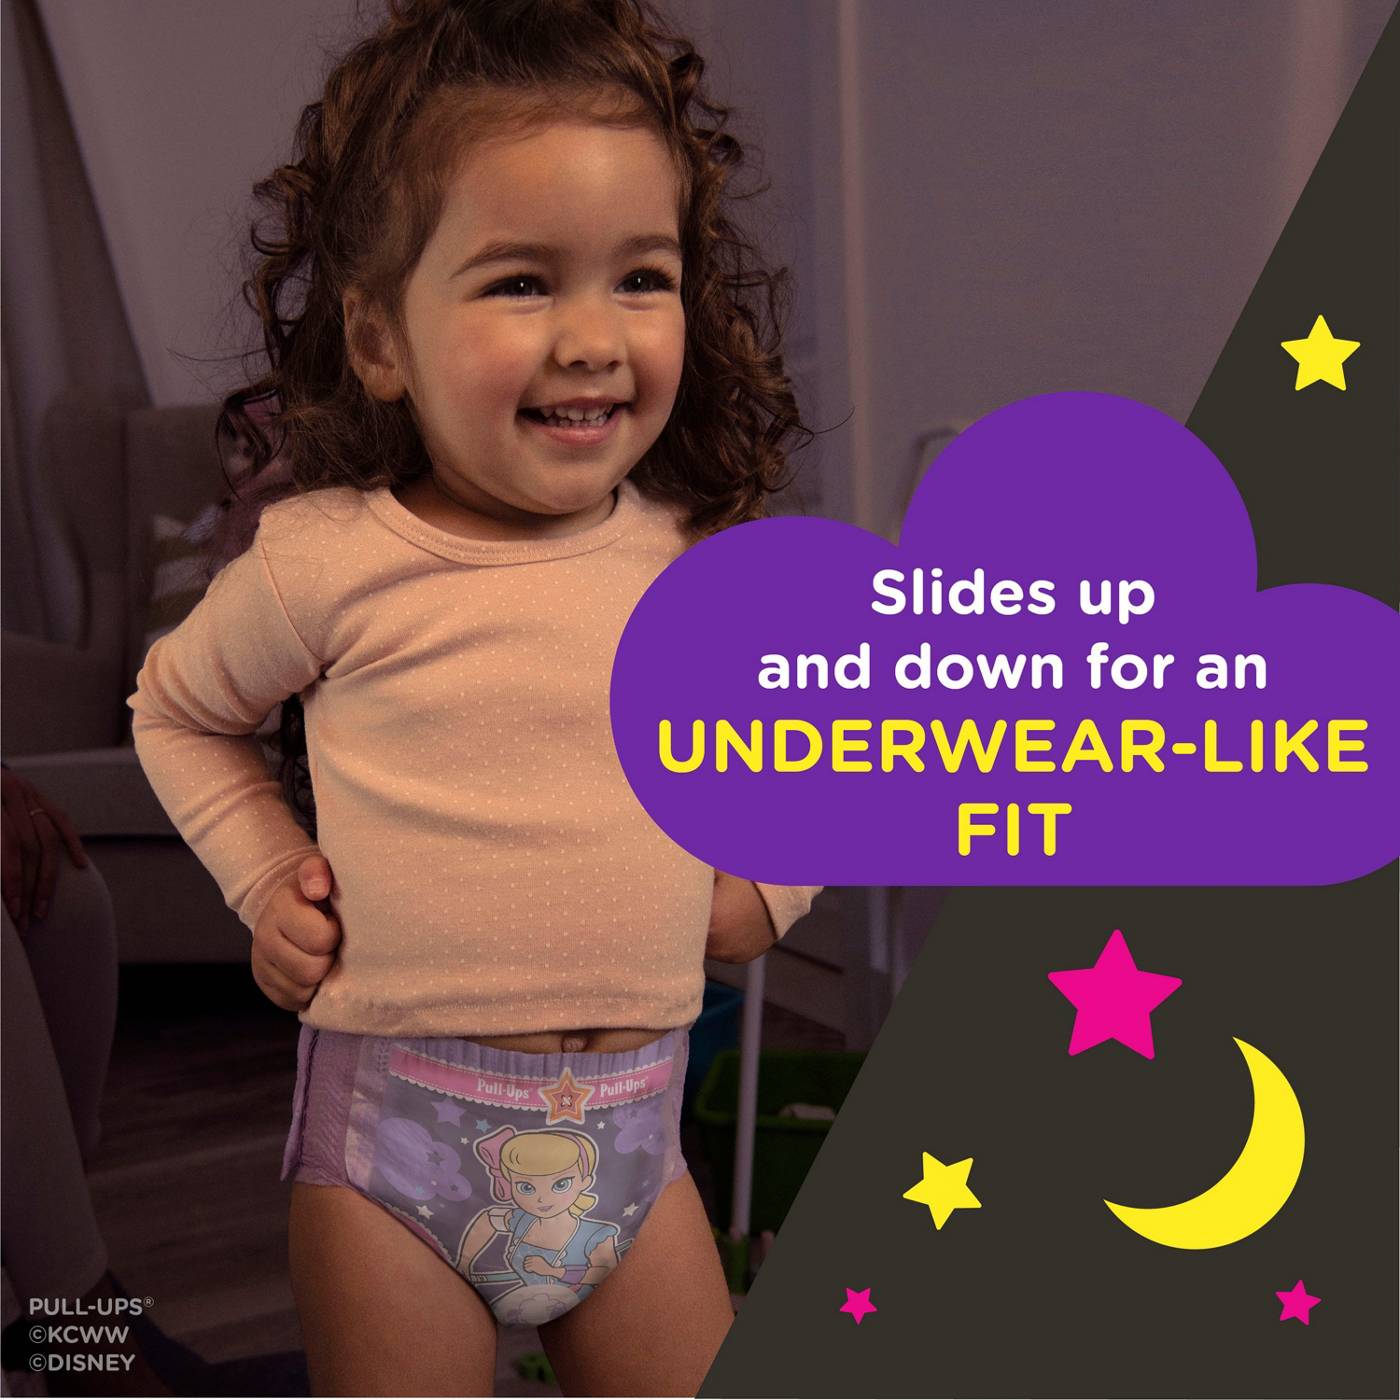 Pull-Ups Girls' Night-Time Potty Training Pants - 2T-3T - Shop